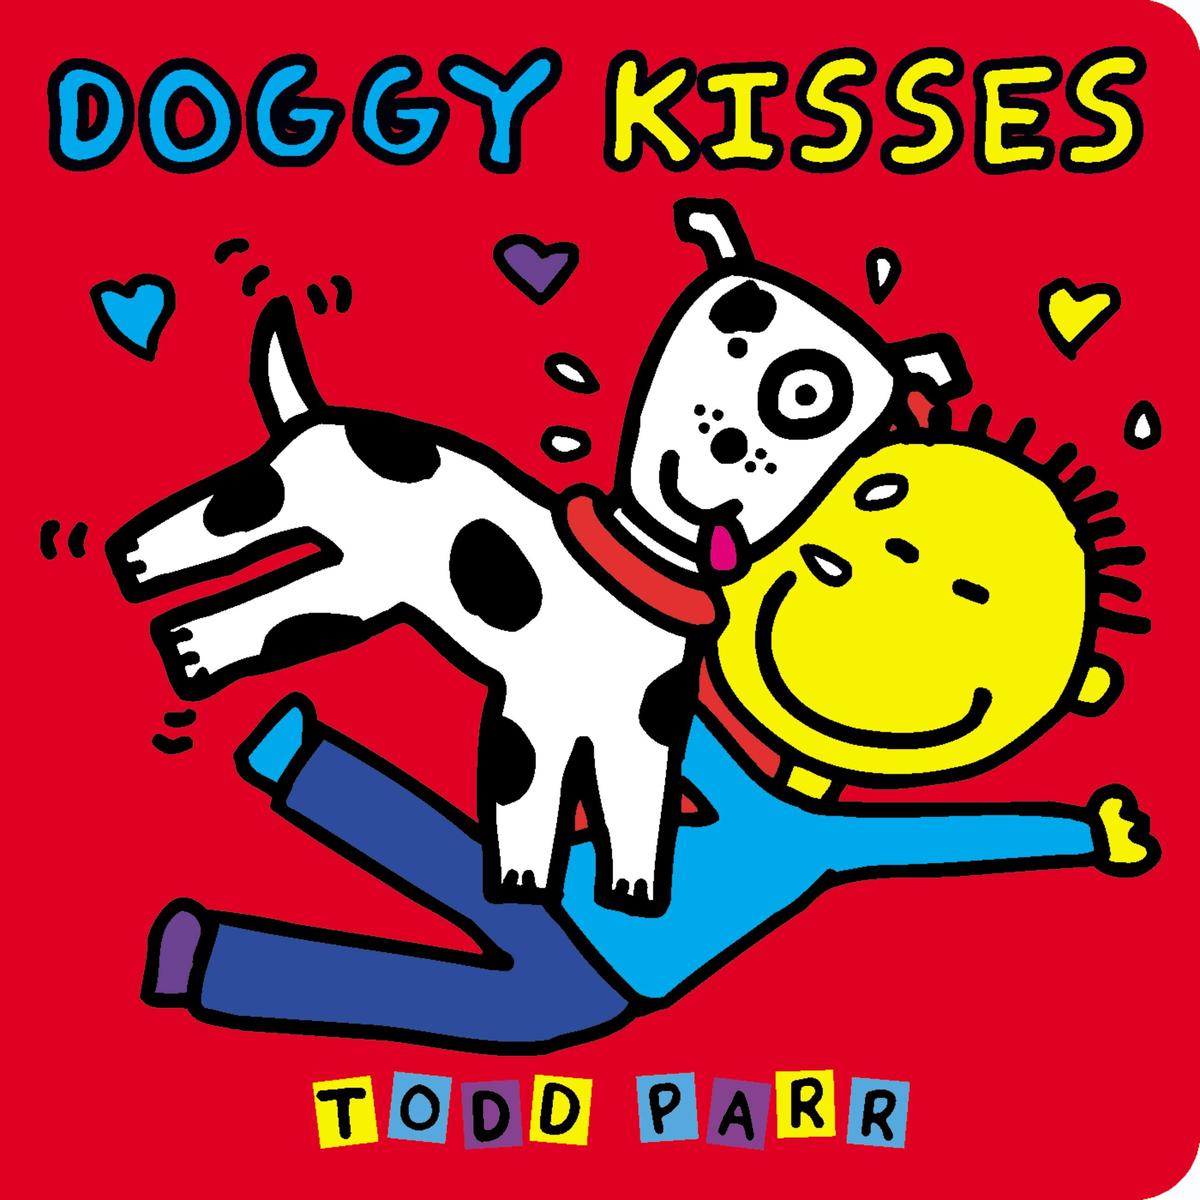 Doggy Kisses - 